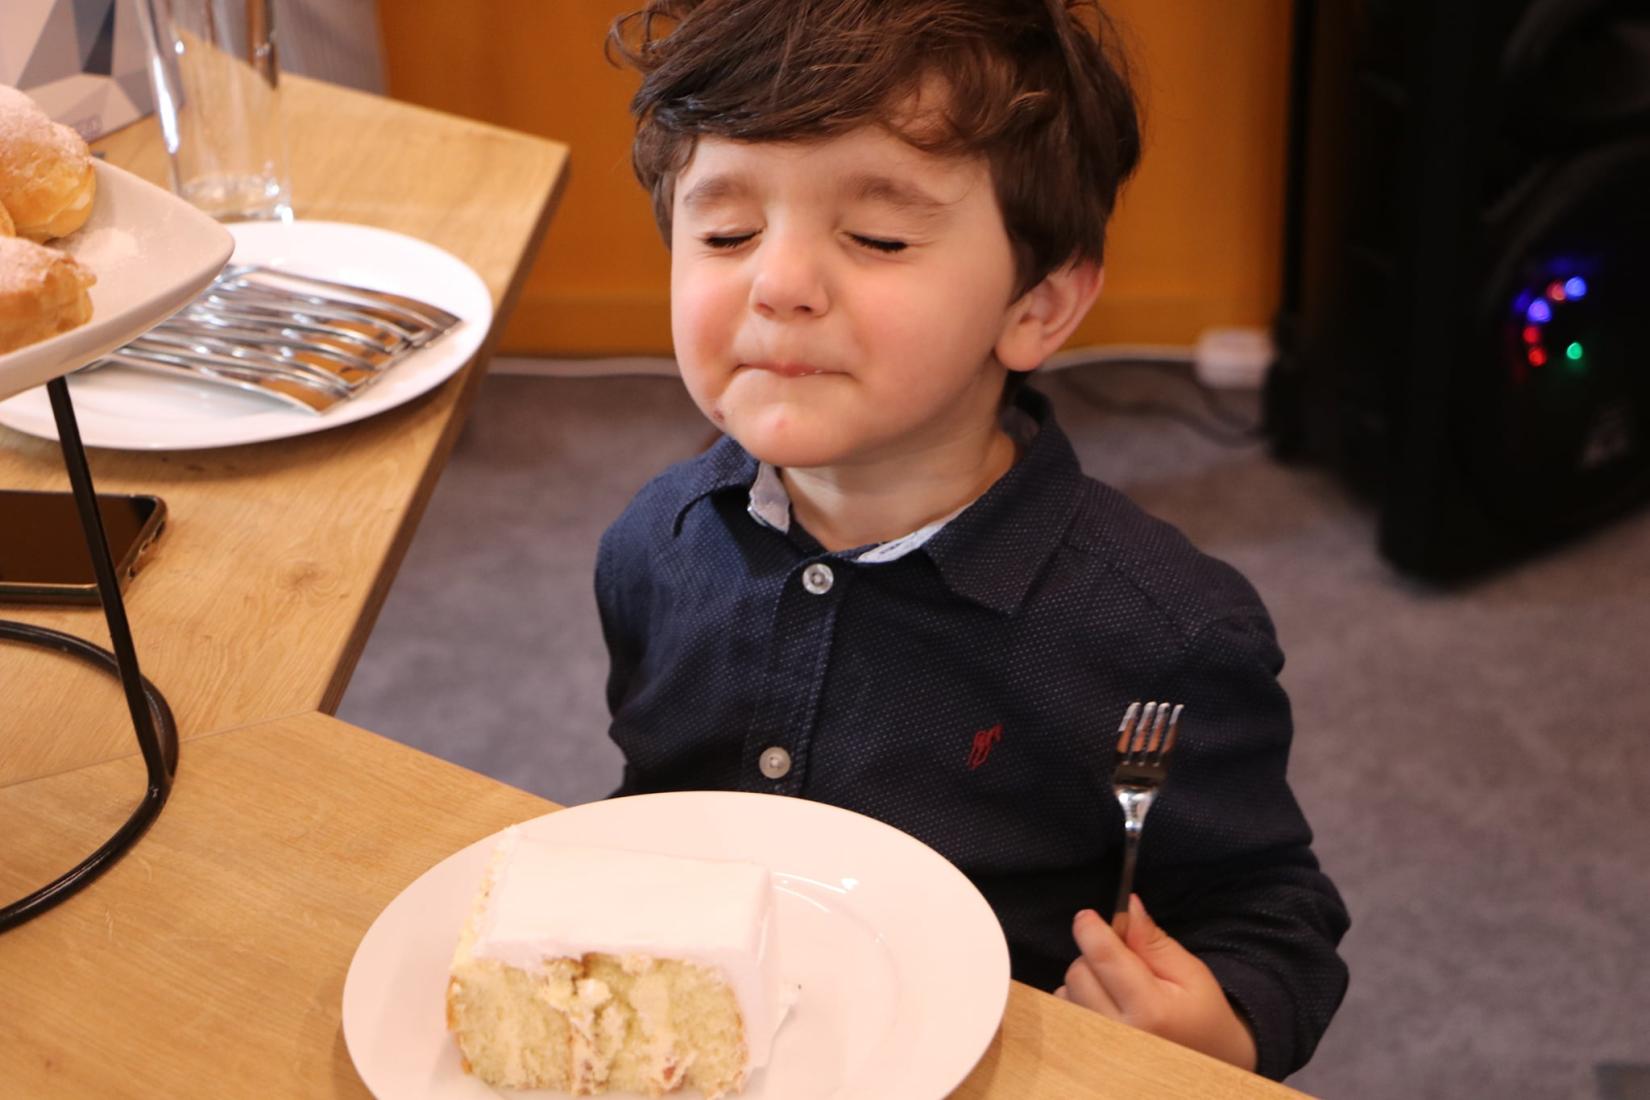 Kid enjoys his slice of cake.